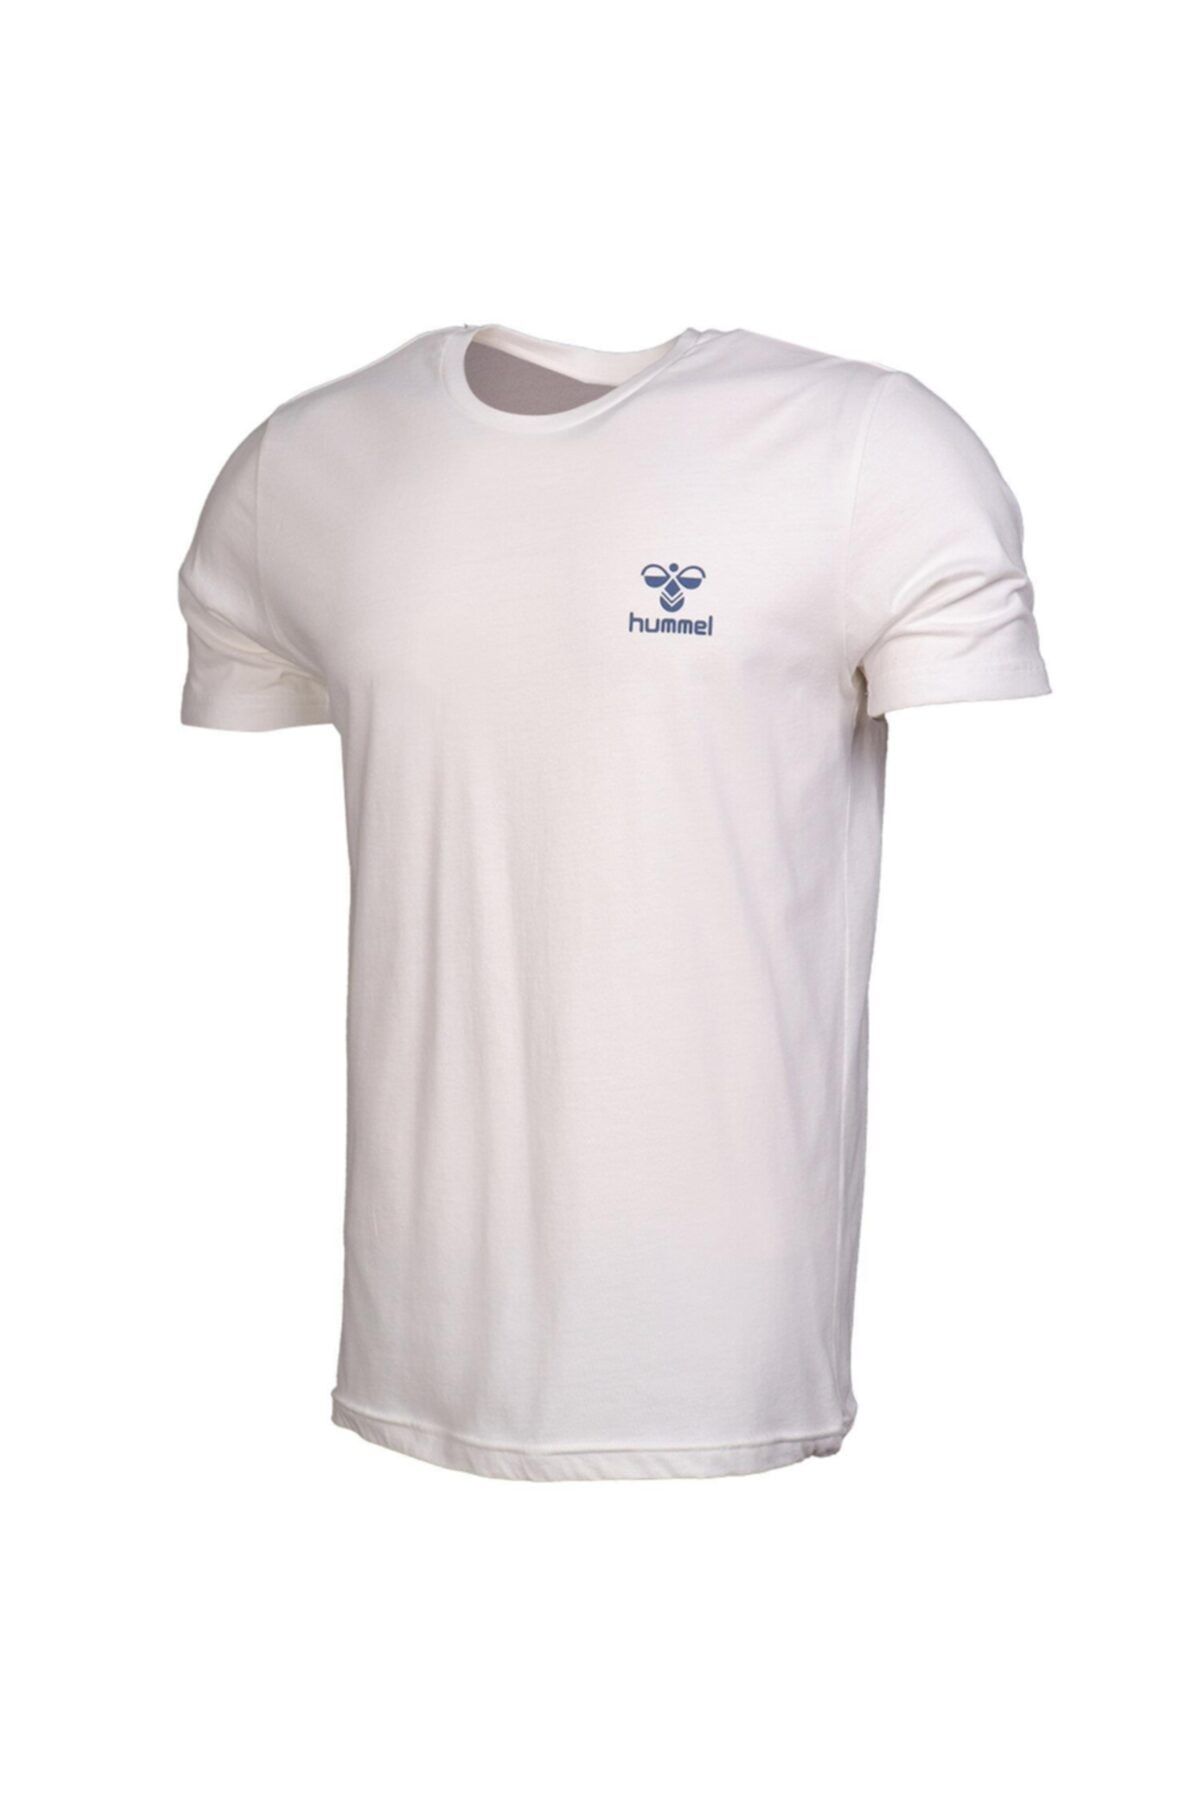 hummel Kevins - Erkek Beyaz T-Shirt